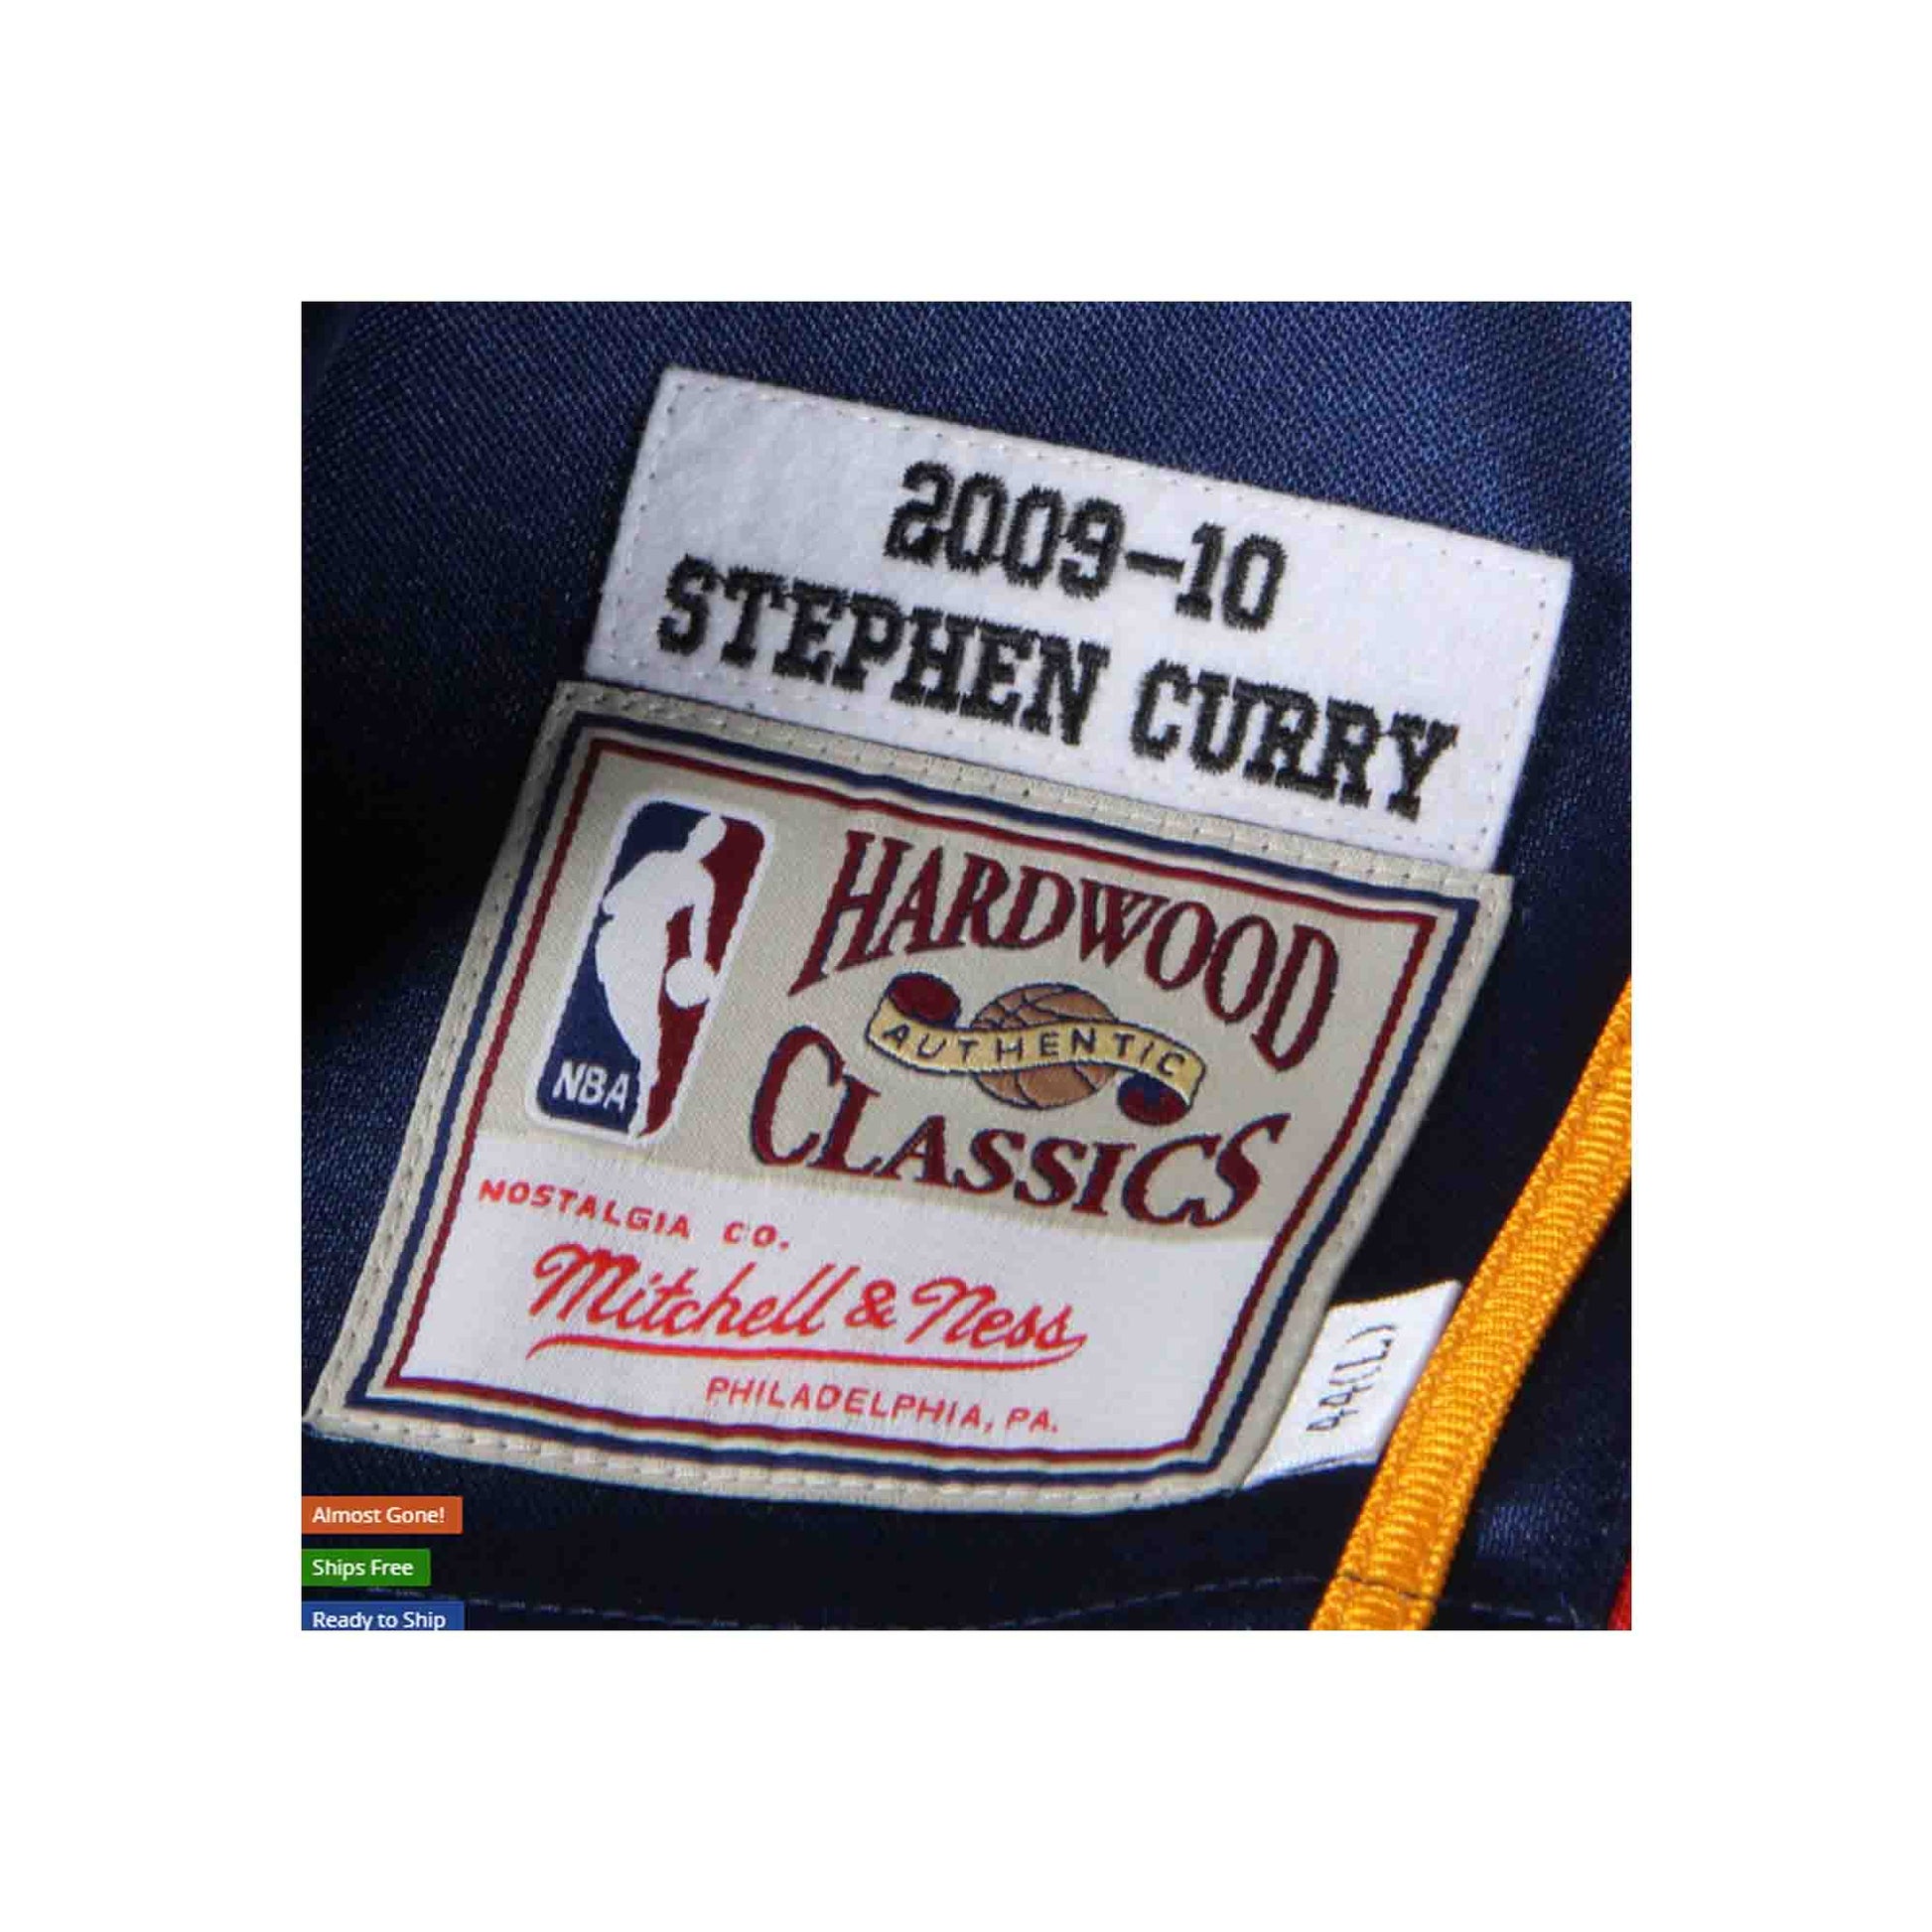 NBA Swingman Jersey Cleveland Cavaliers Lebron James #23 – Broskiclothing